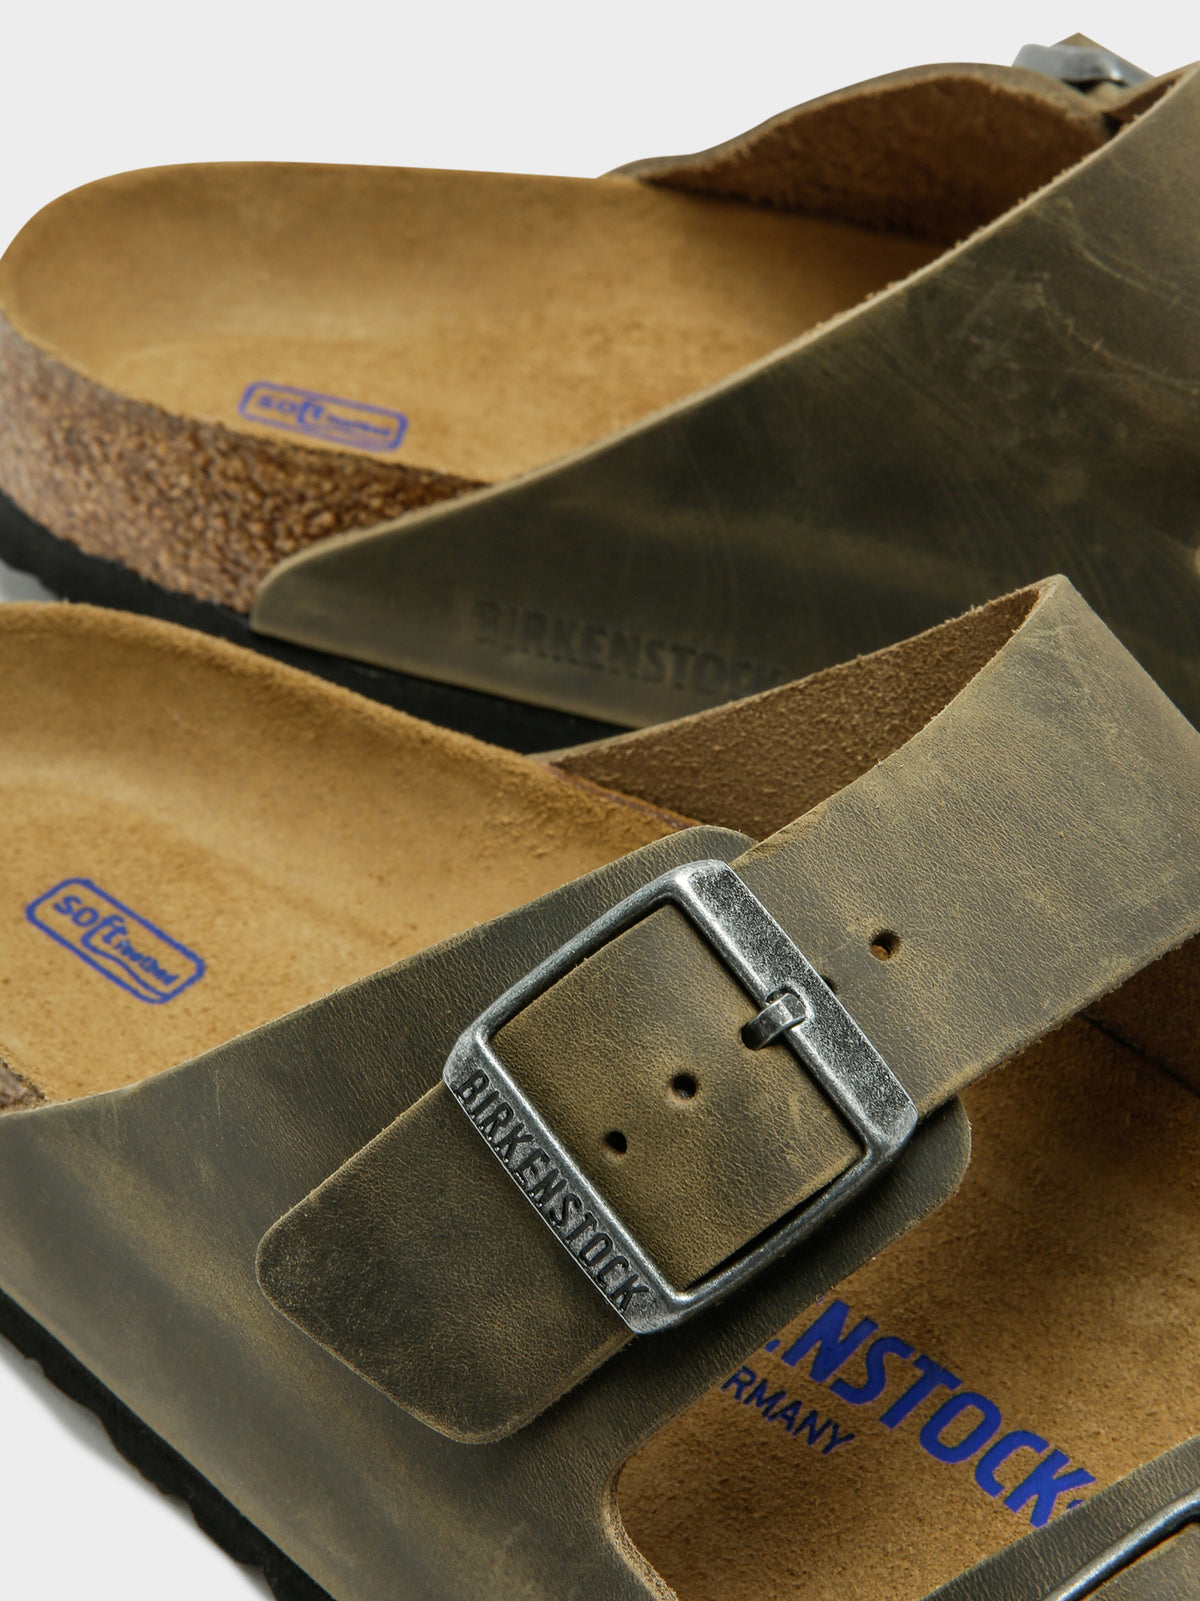 Unisex Arizona SFB Sandals in Faded Khaki